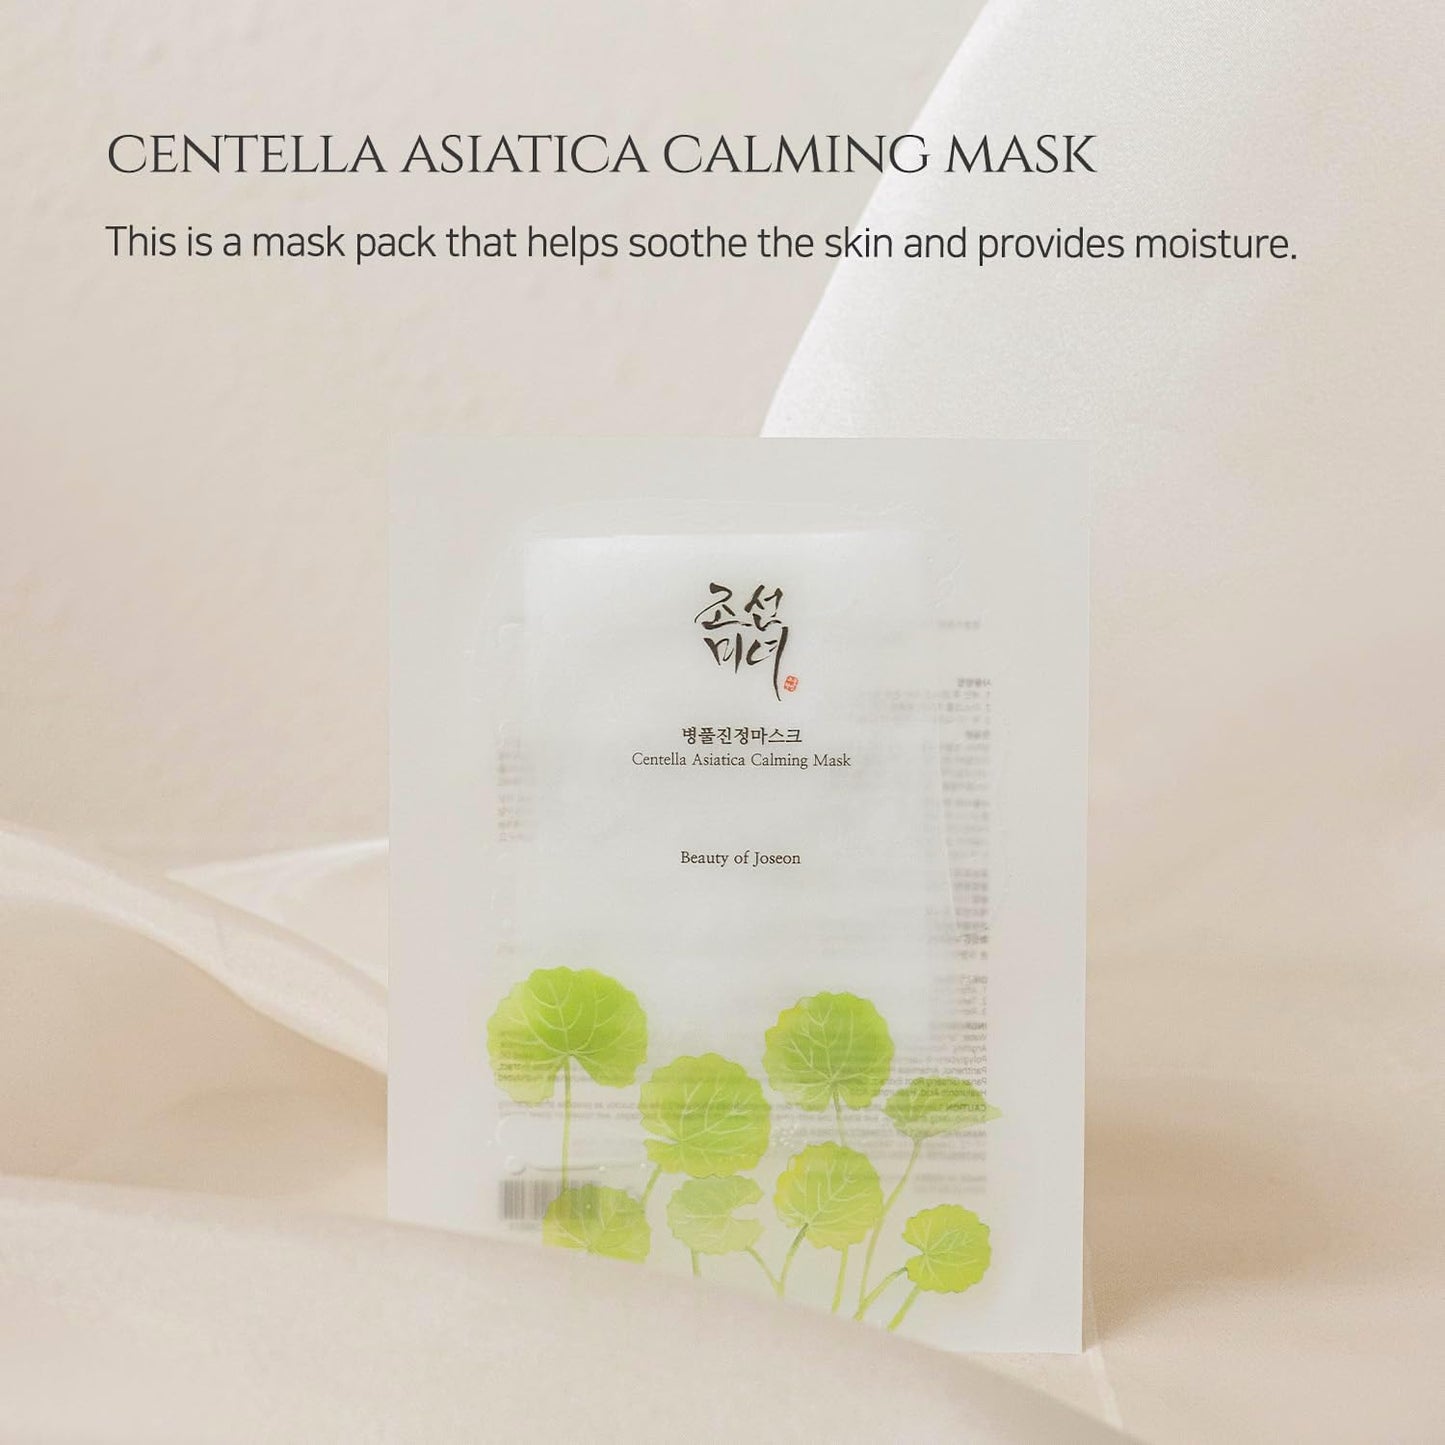 Beauty of Joeson Centella Asiatica Calming Mask